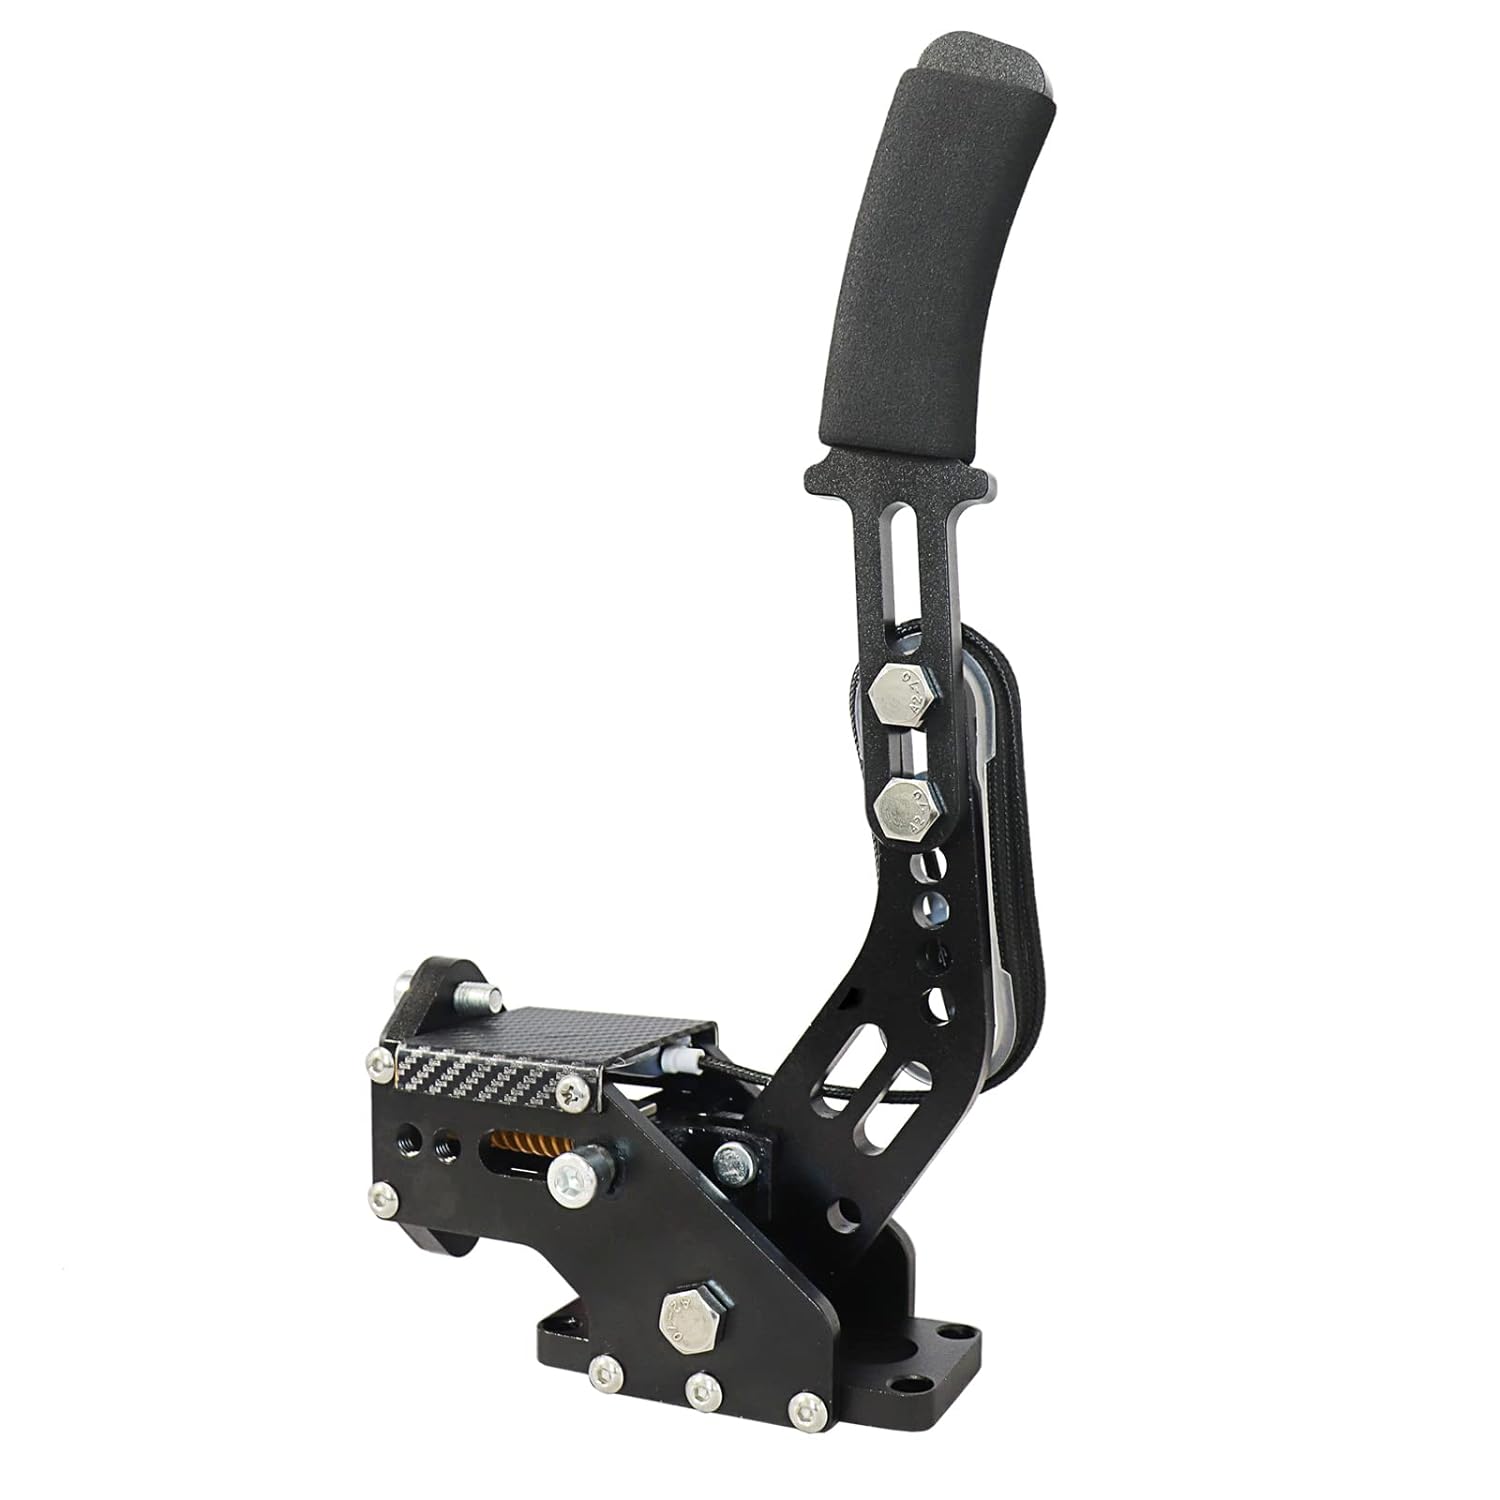 Mkbve 64Bit PC USB Handbrake - Sim Racing Handbrake for Logitech G920 G29 G25 G27 T500 T300 FANATECOSW Dirt Rally(Black with clamp)